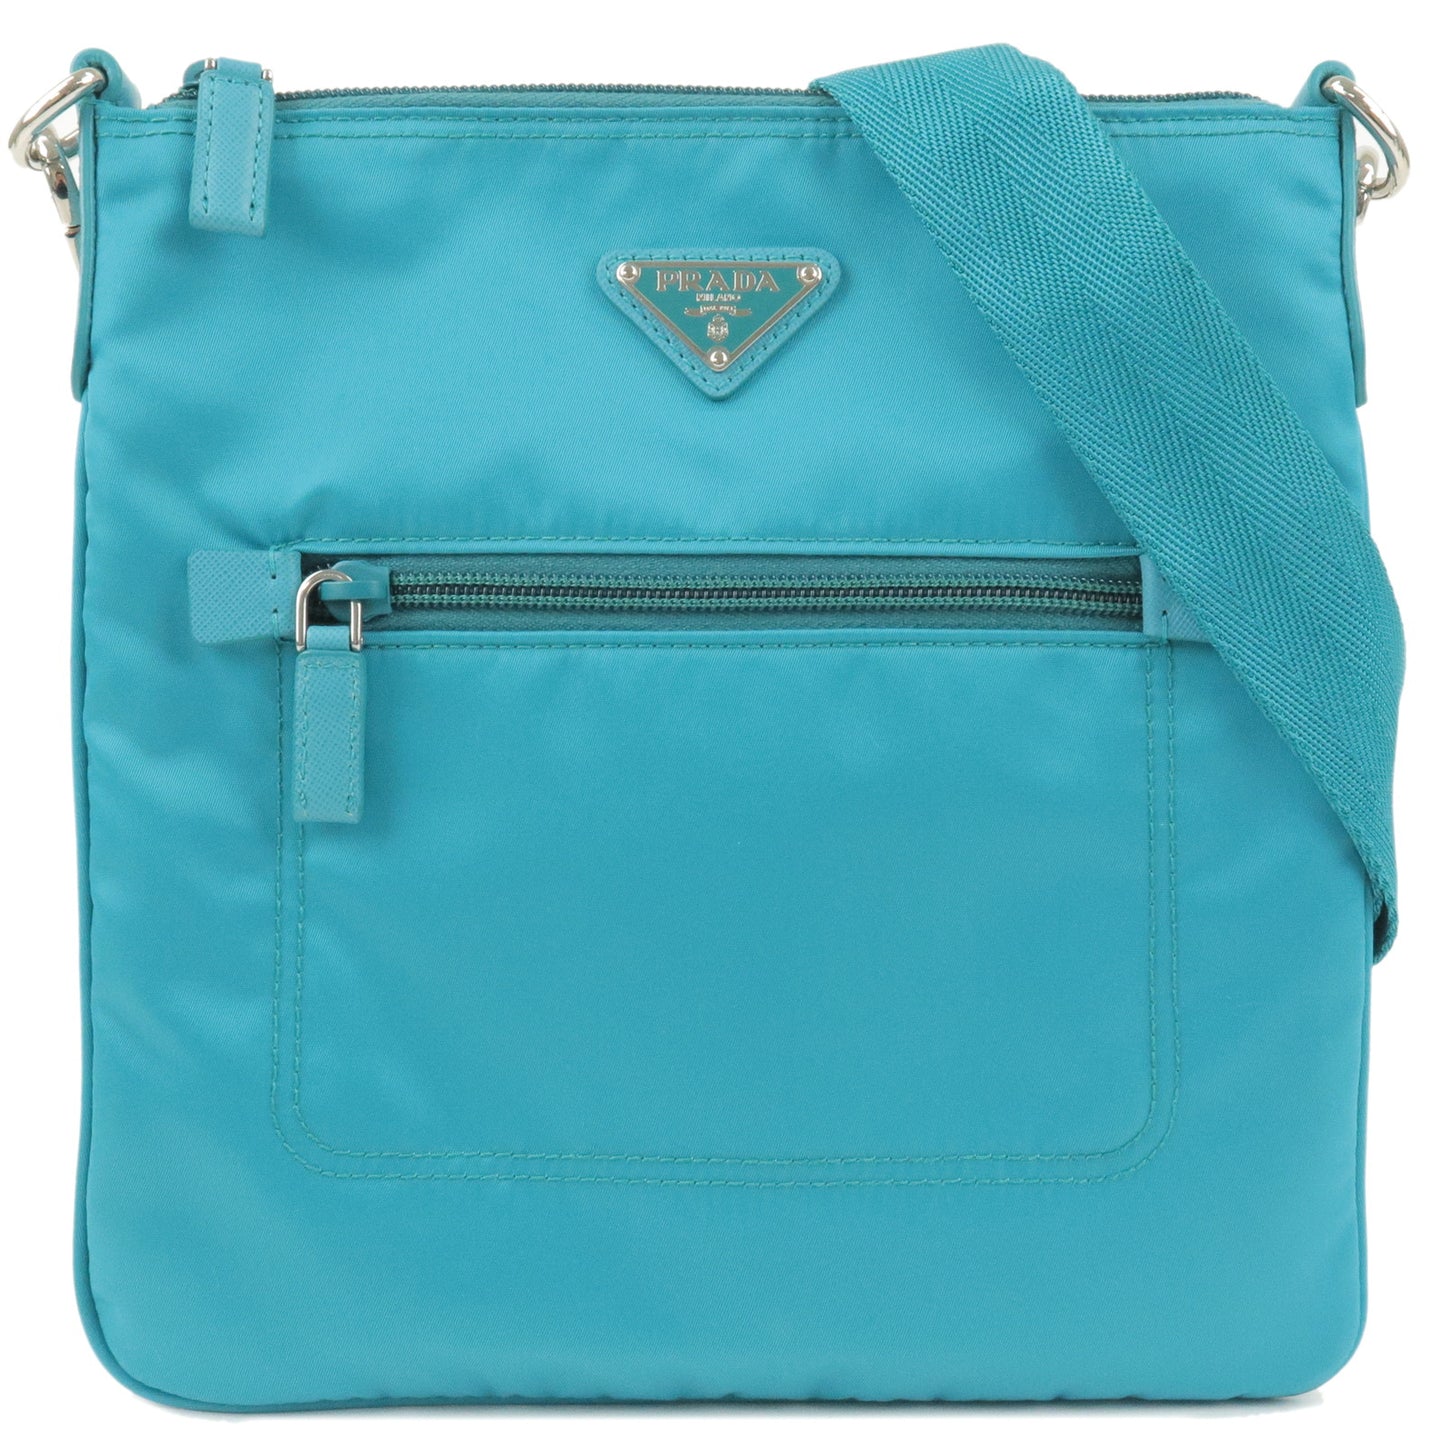 PRADA-Logo-Nylon-Leather-Shoulder-Bag-Turquoise-Blue-BT0716